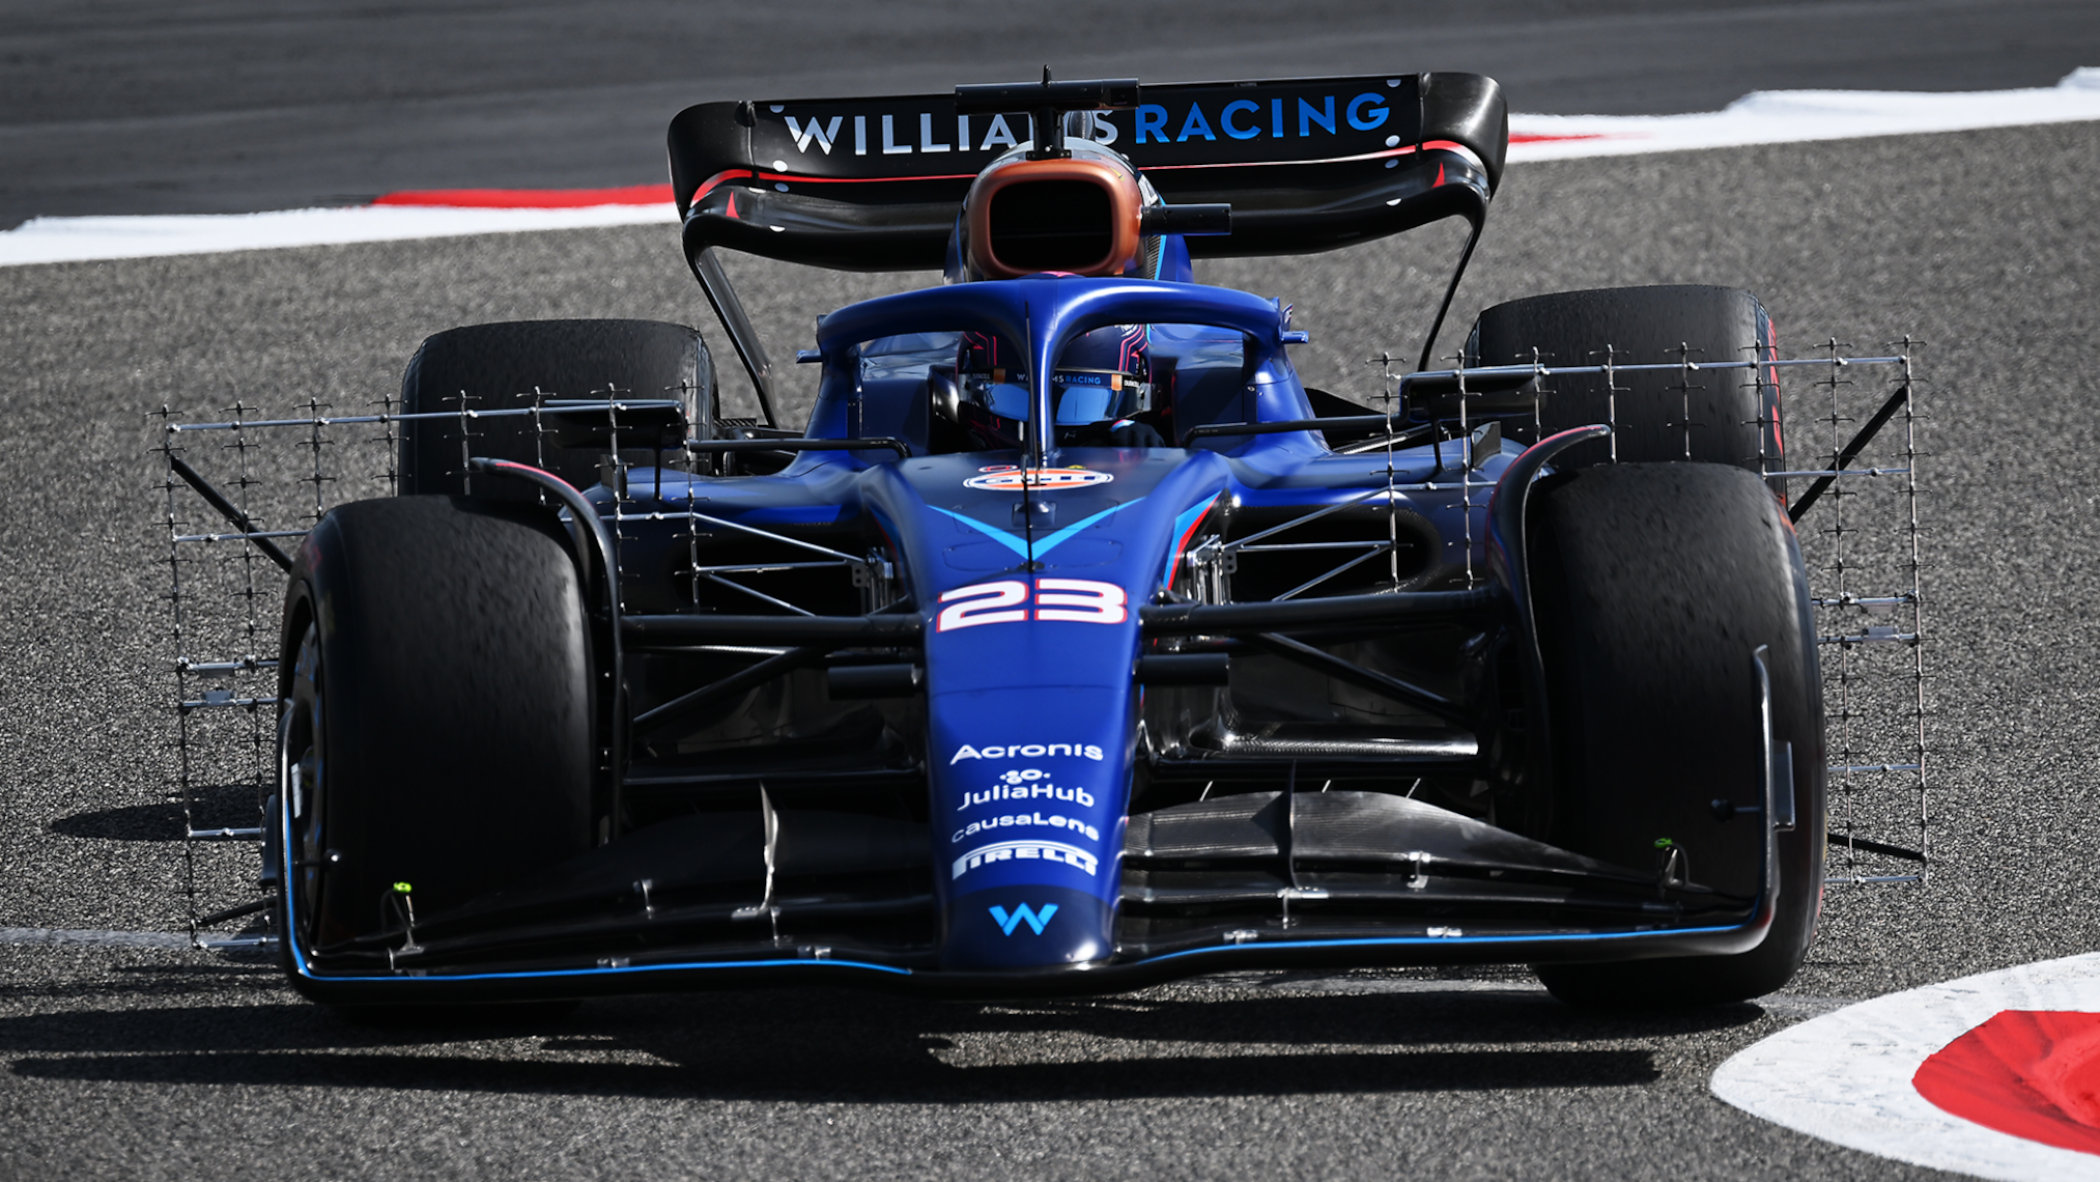 2023 Williams Racing FW45 Formula 1 car - Alexander Albon - Logan Sargeant - Pre-season testing with aero rakes